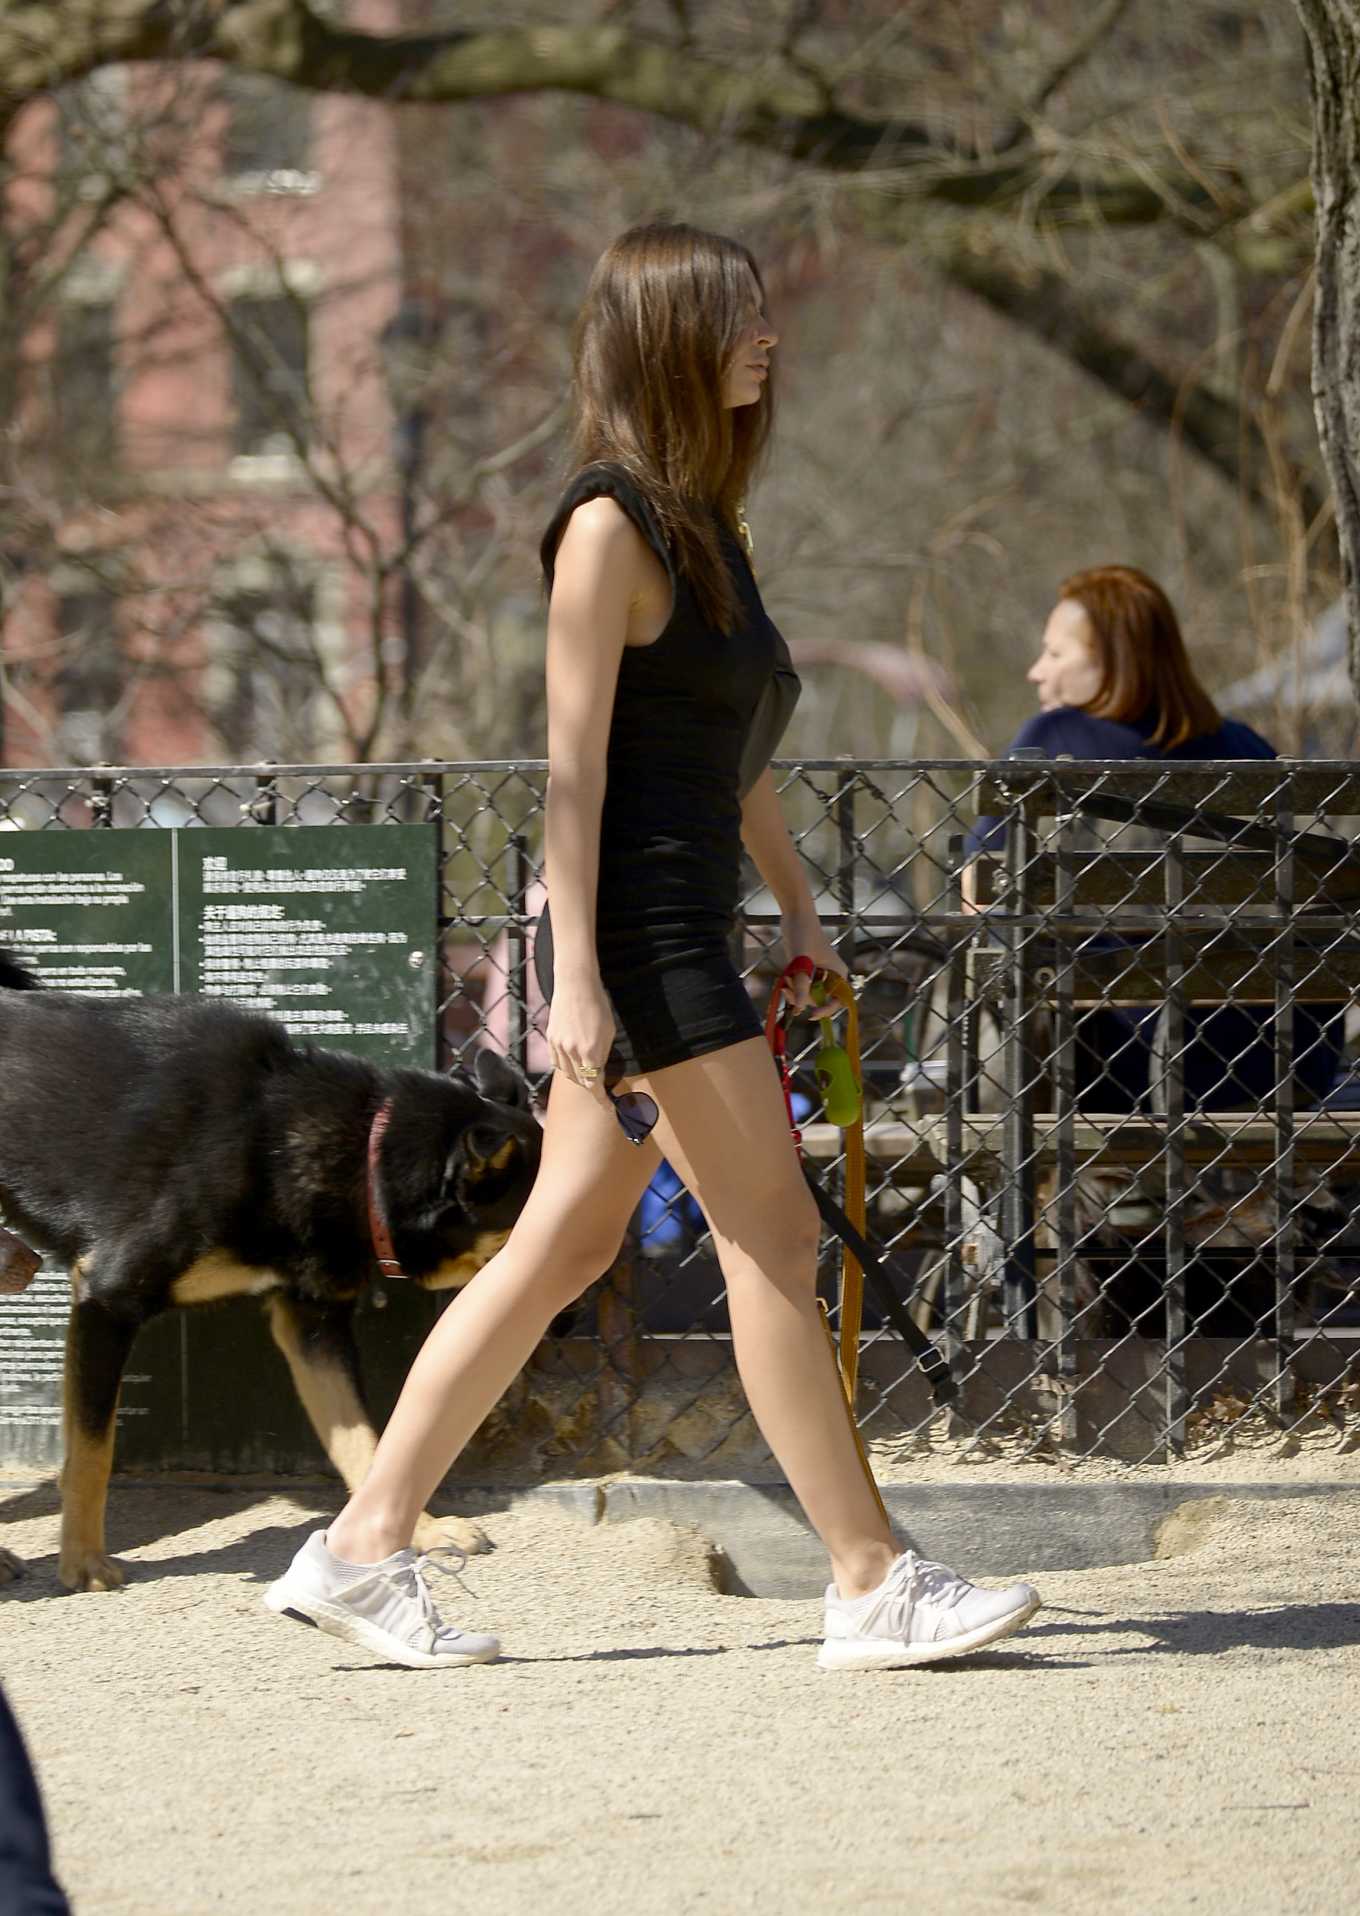 Emily Ratajkowski in Mini Black Dress â€“ Walking her dog in NYC